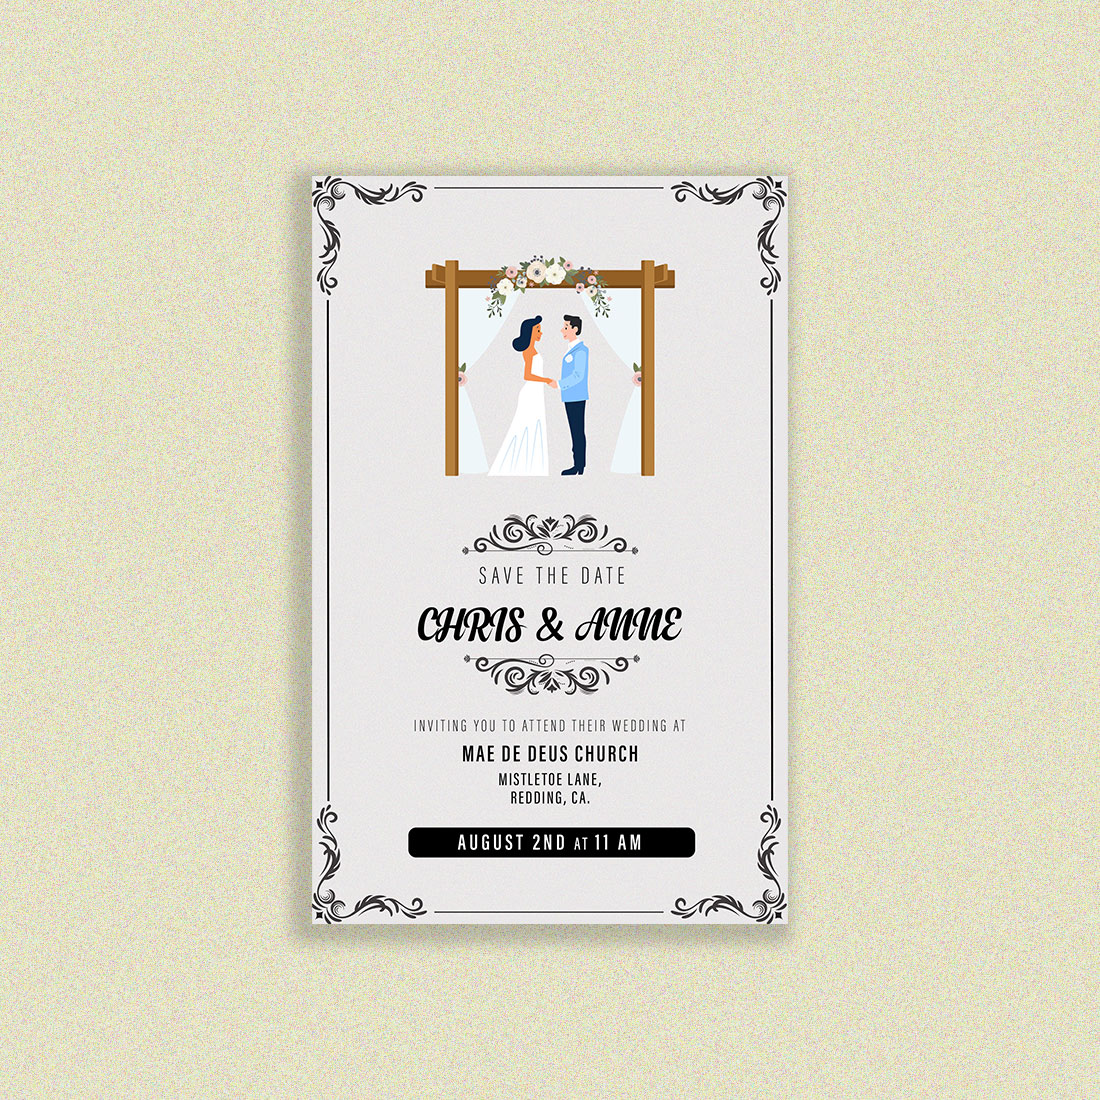 Wedding Invitation Card cover image.